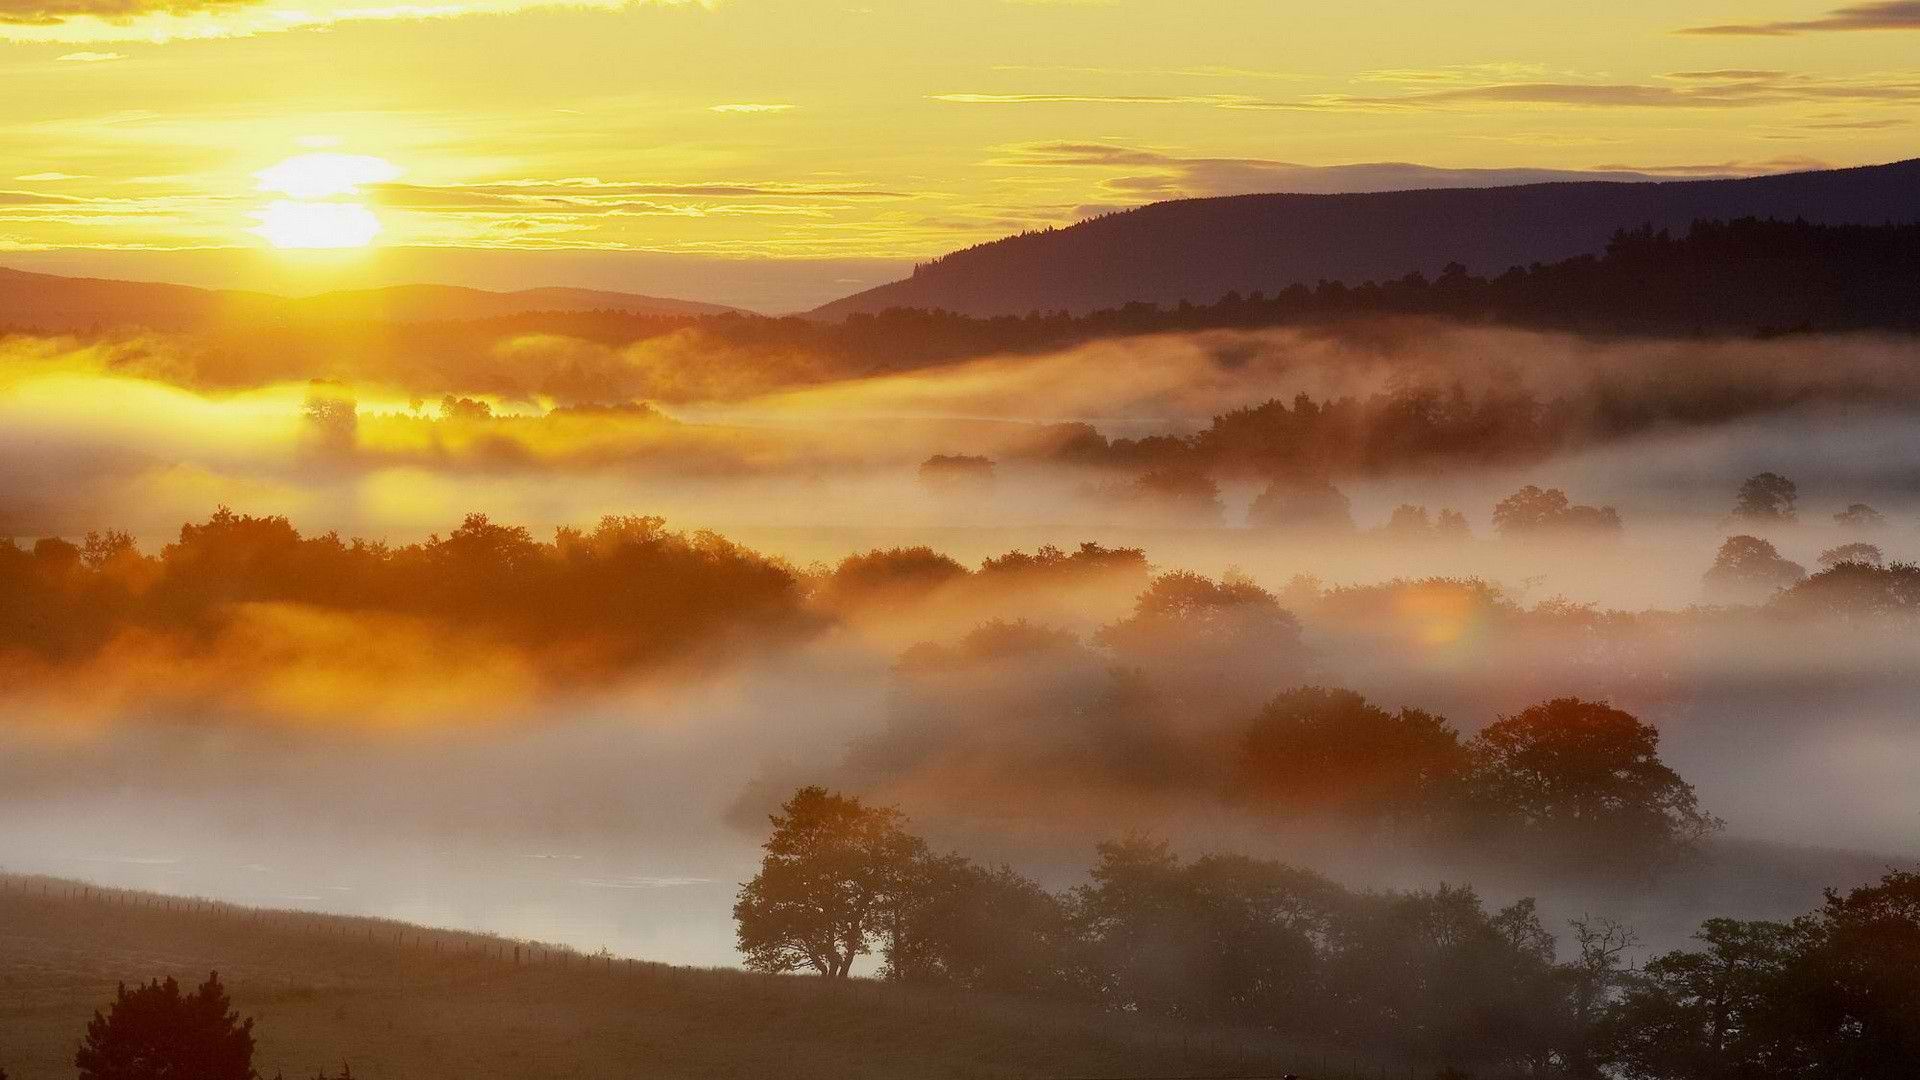 misty sunrise | Landscape | Pinterest